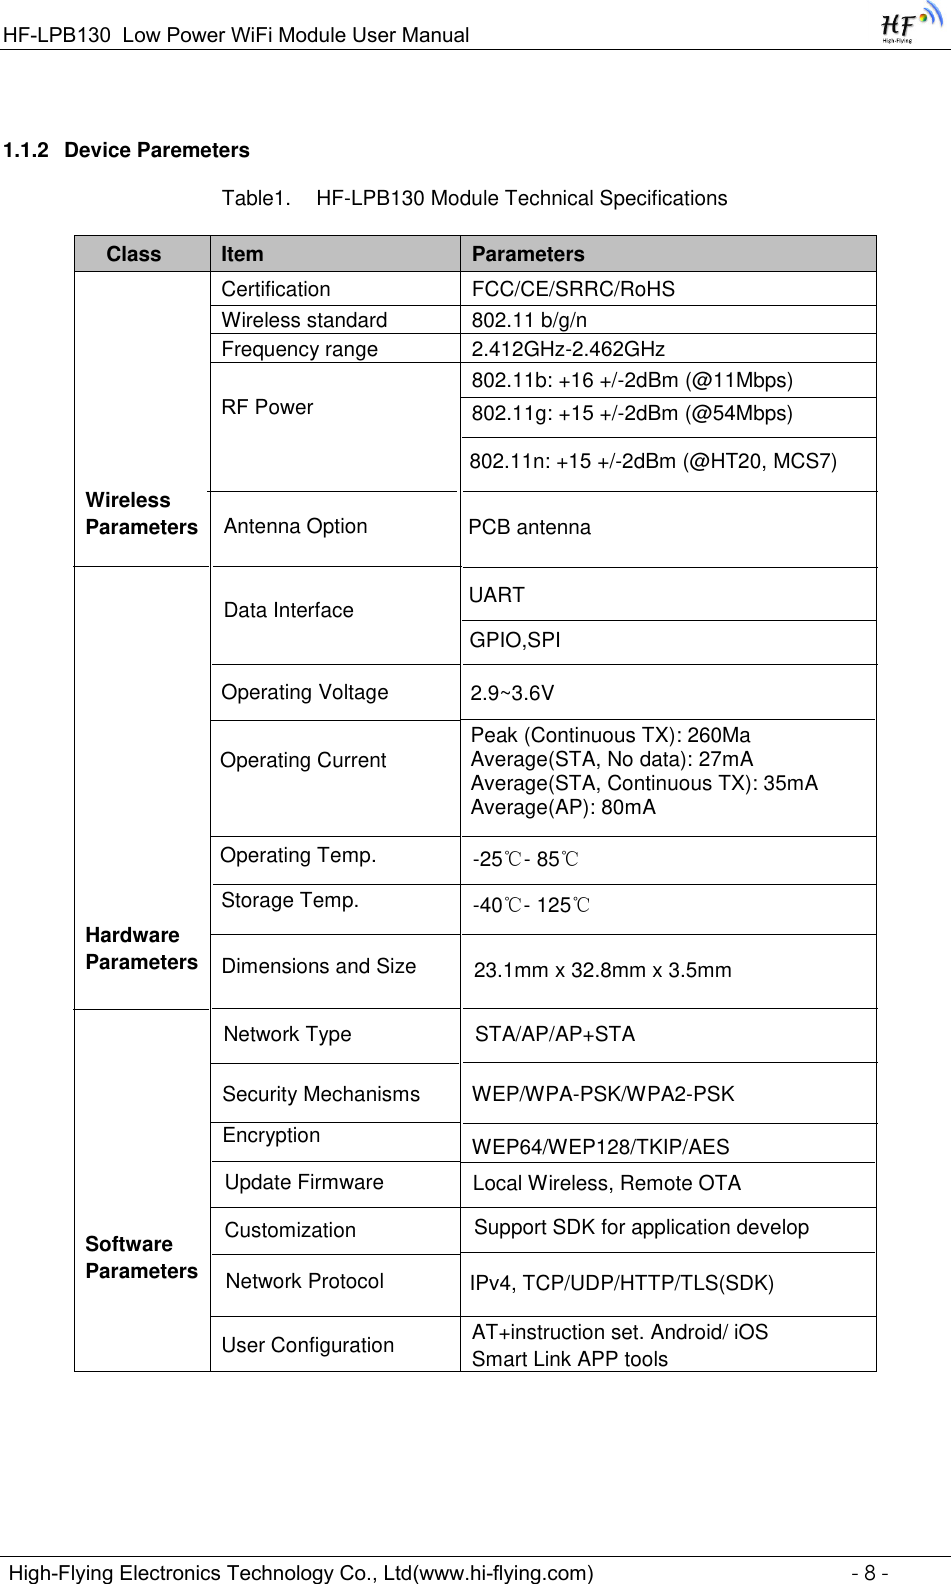 Page 8 of High Flying Electronics Technology HF-LPB130 Wi-Fi Module User Manual GPON SFU System Design